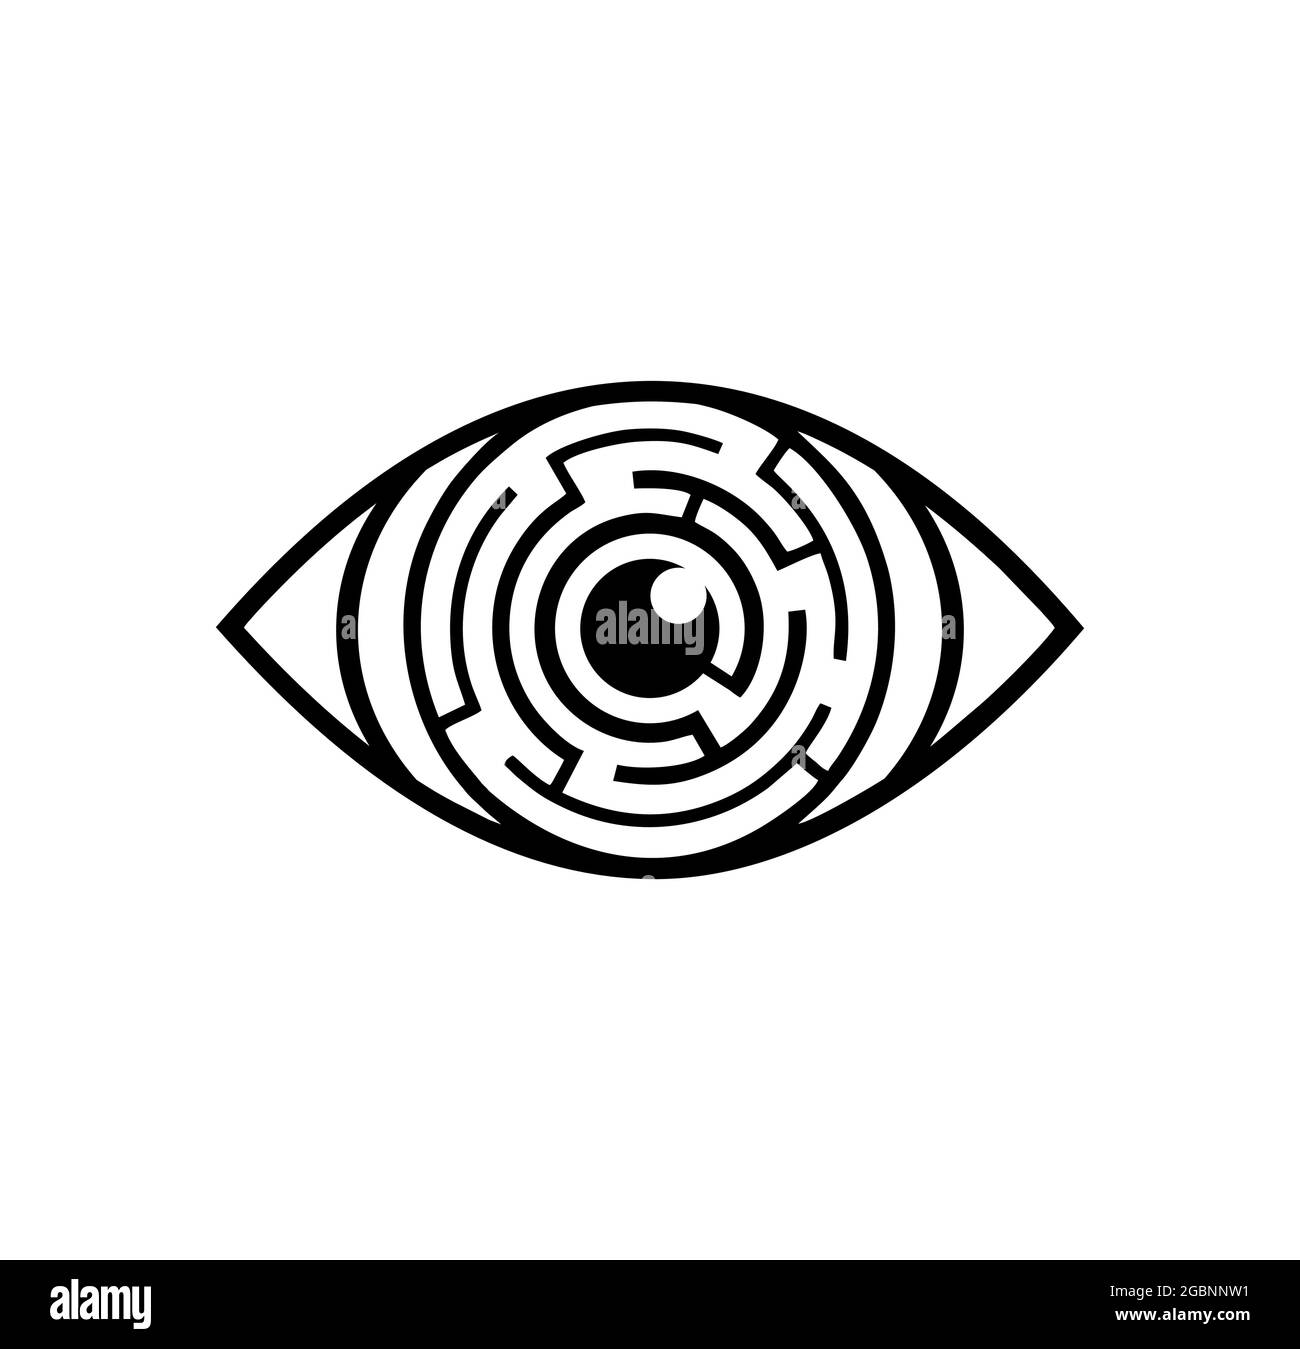 A Vector Illustration of Iris Labyrinth Eye Logo Sign Stock Vector